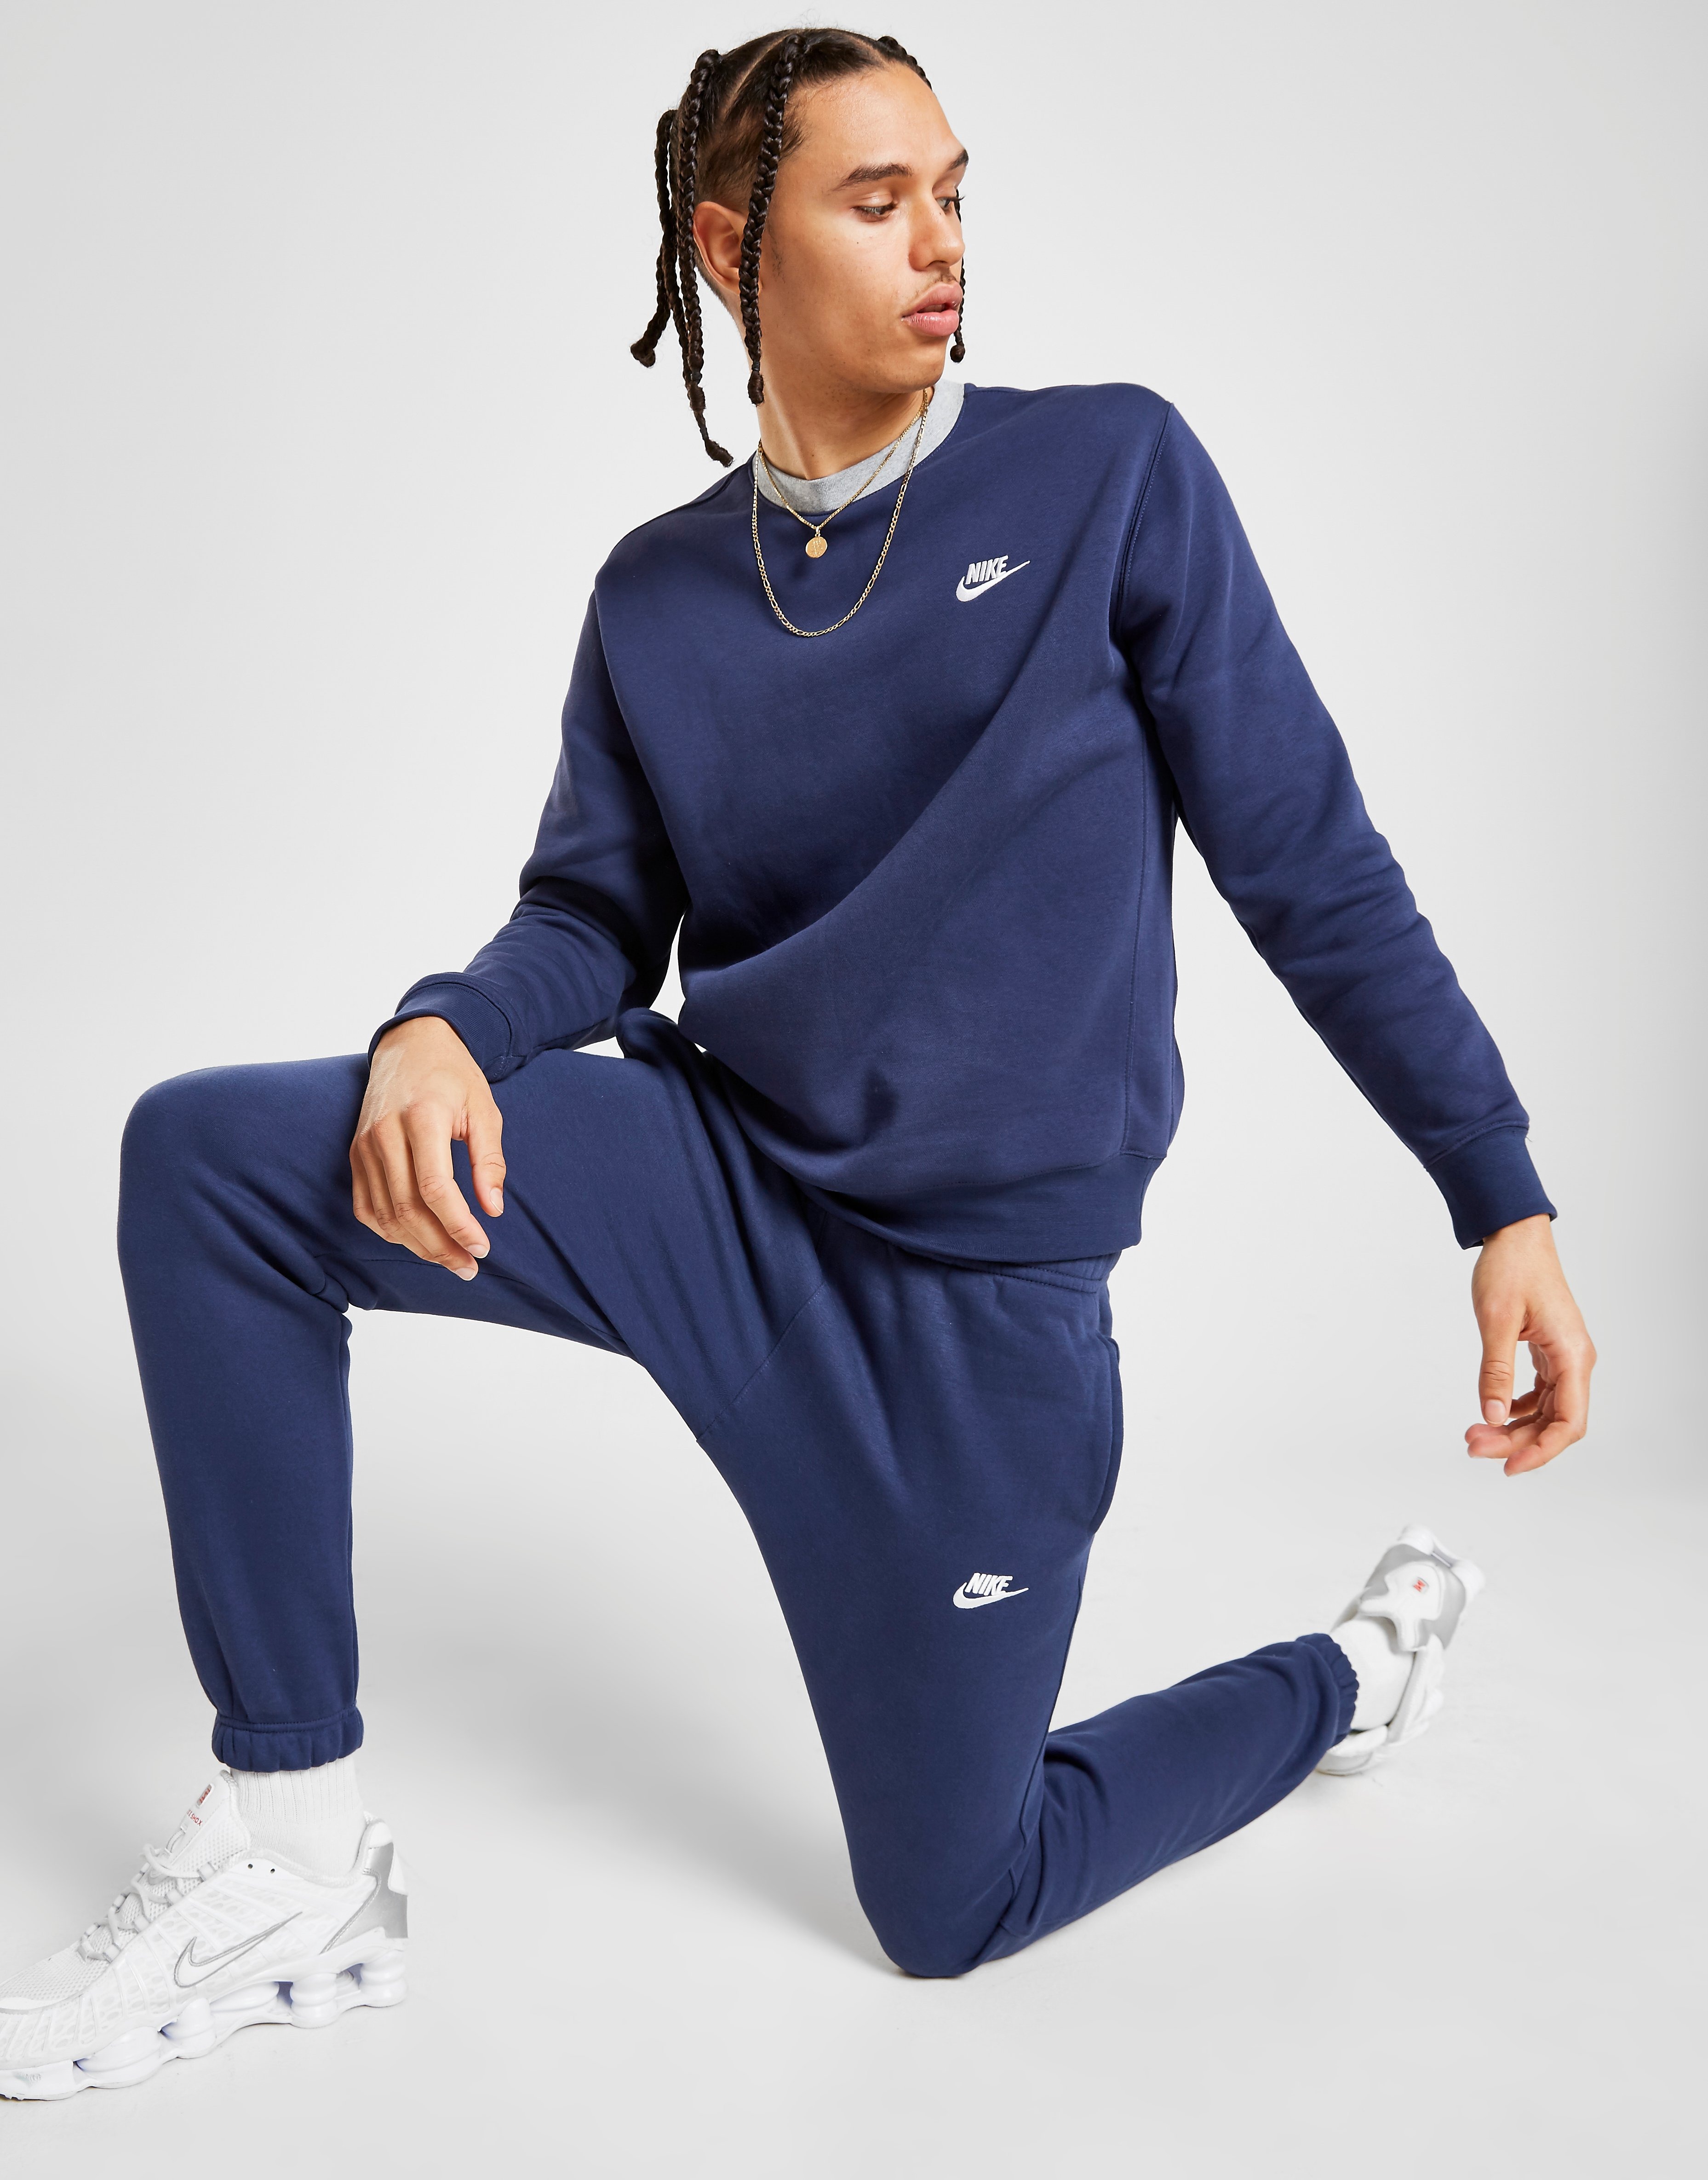 Koop Blauw Nike Club Cuffed Fleece Pants | JD Sports